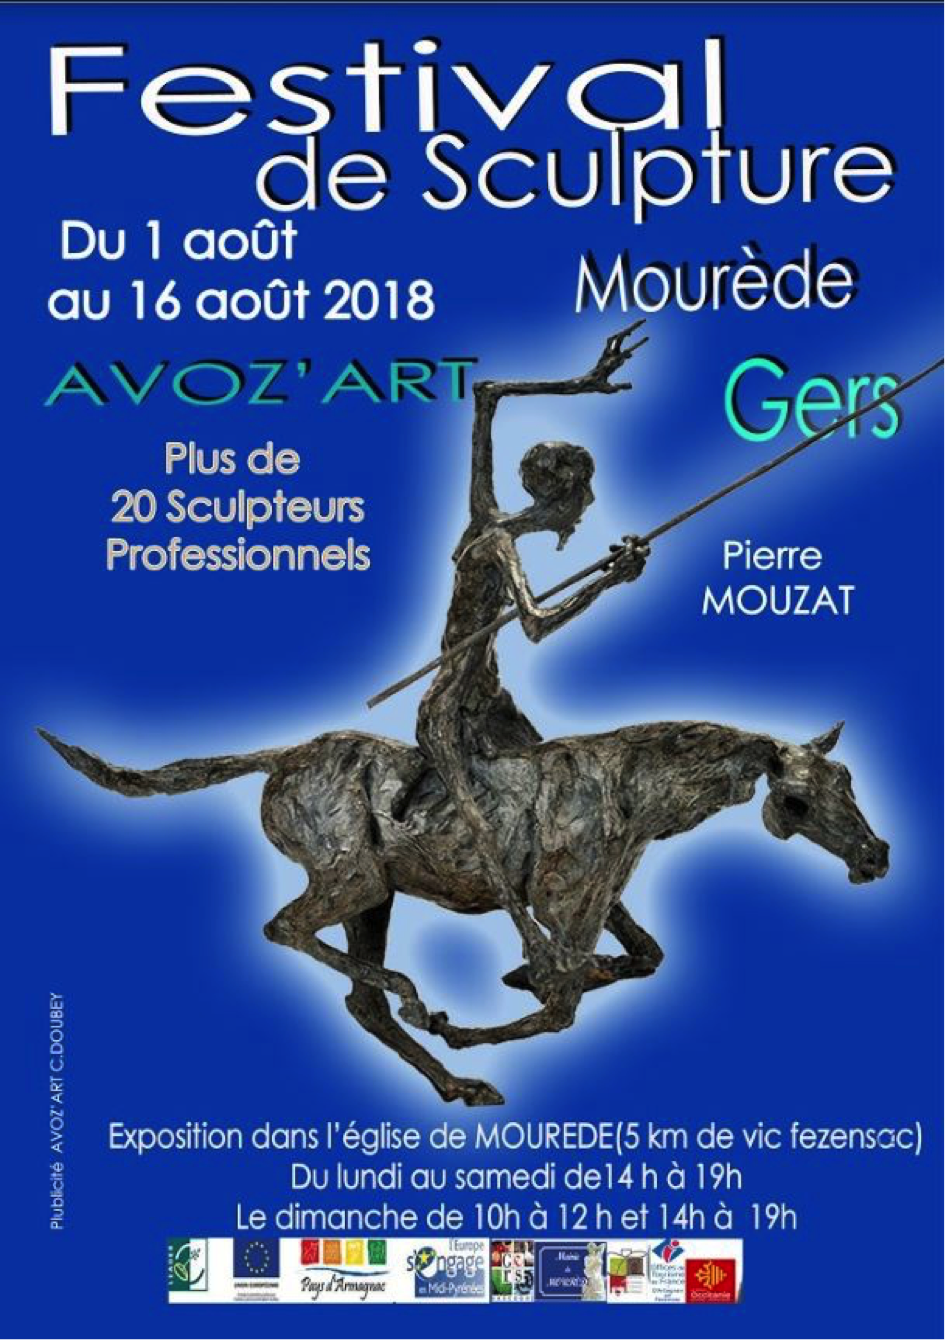 Festival de Mourede